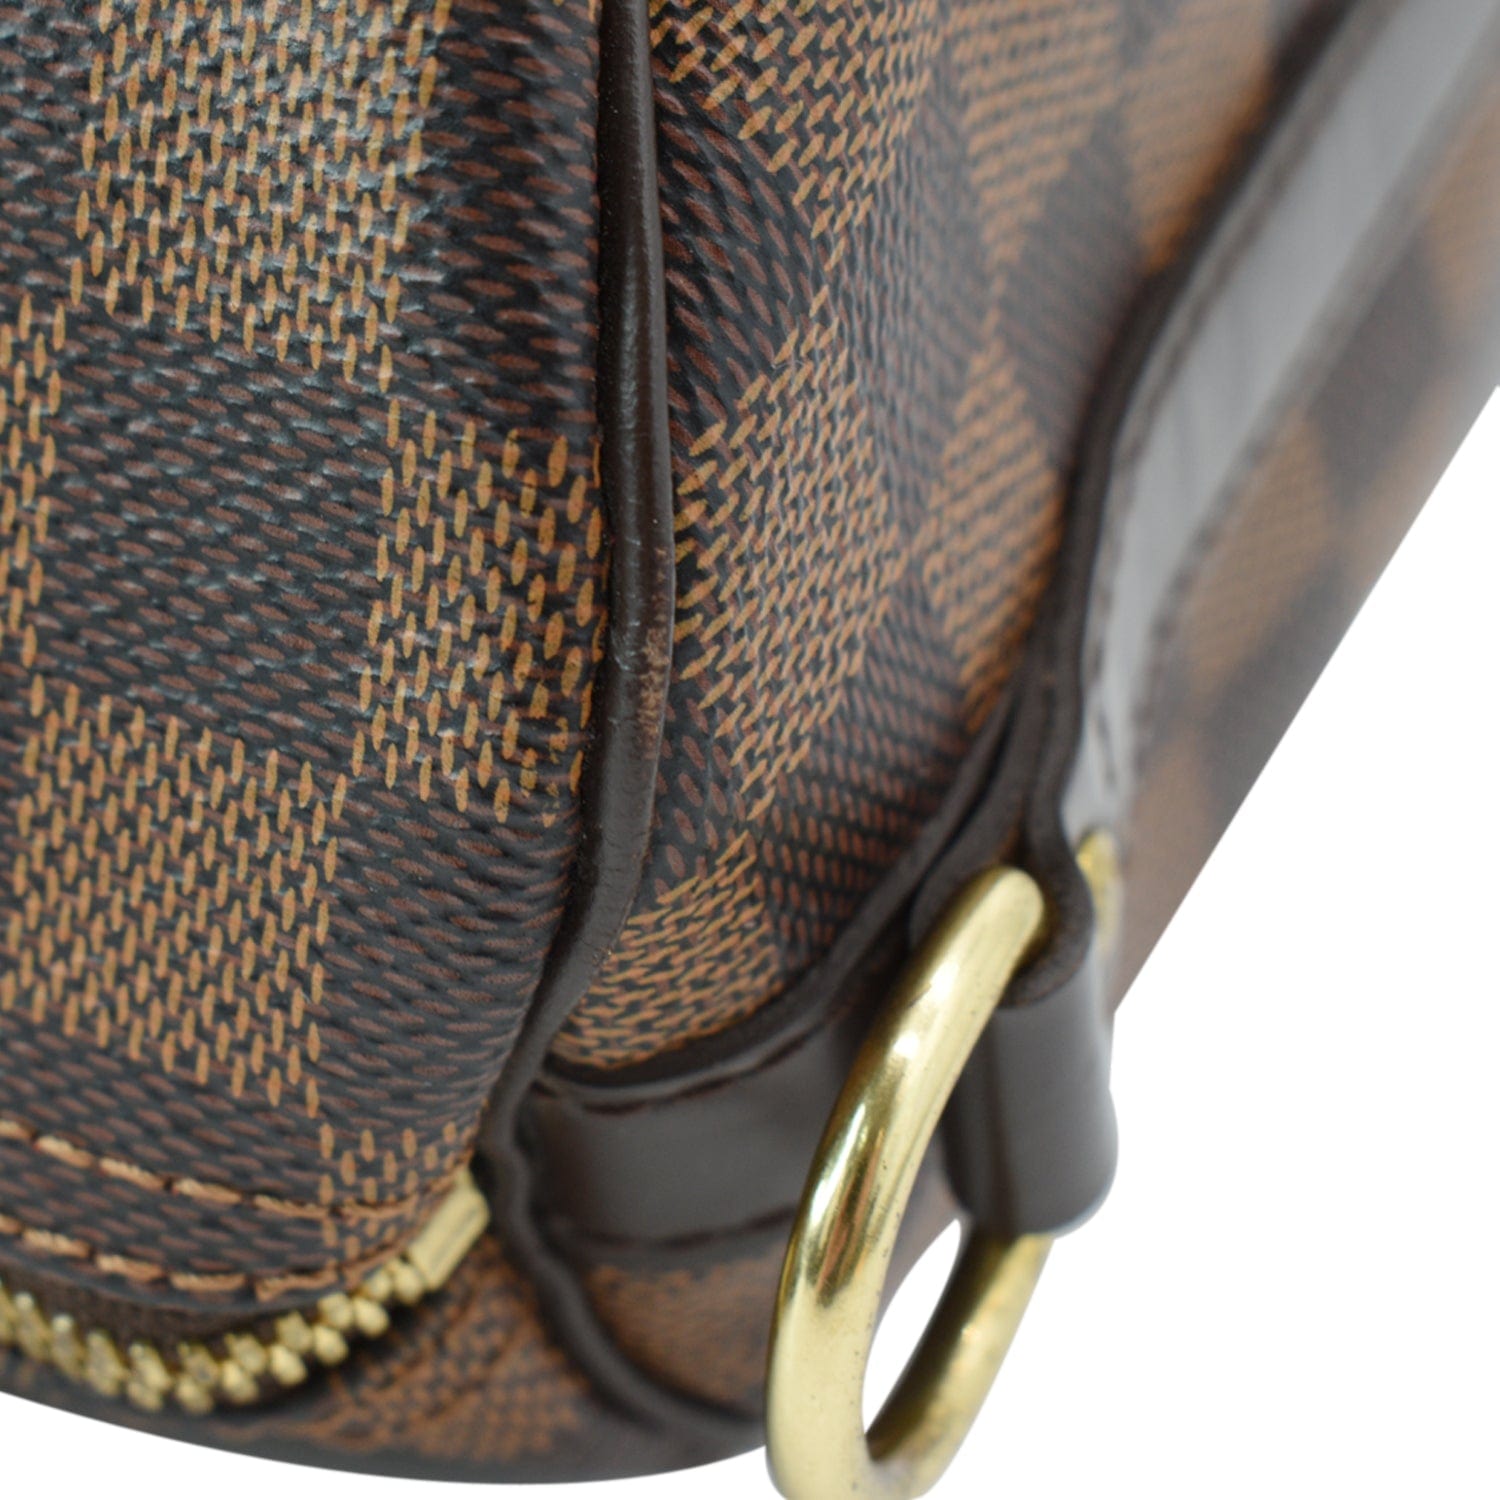 Louis Vuitton Speedy 30 Damier Ebene Bag - THE PURSE AFFAIR